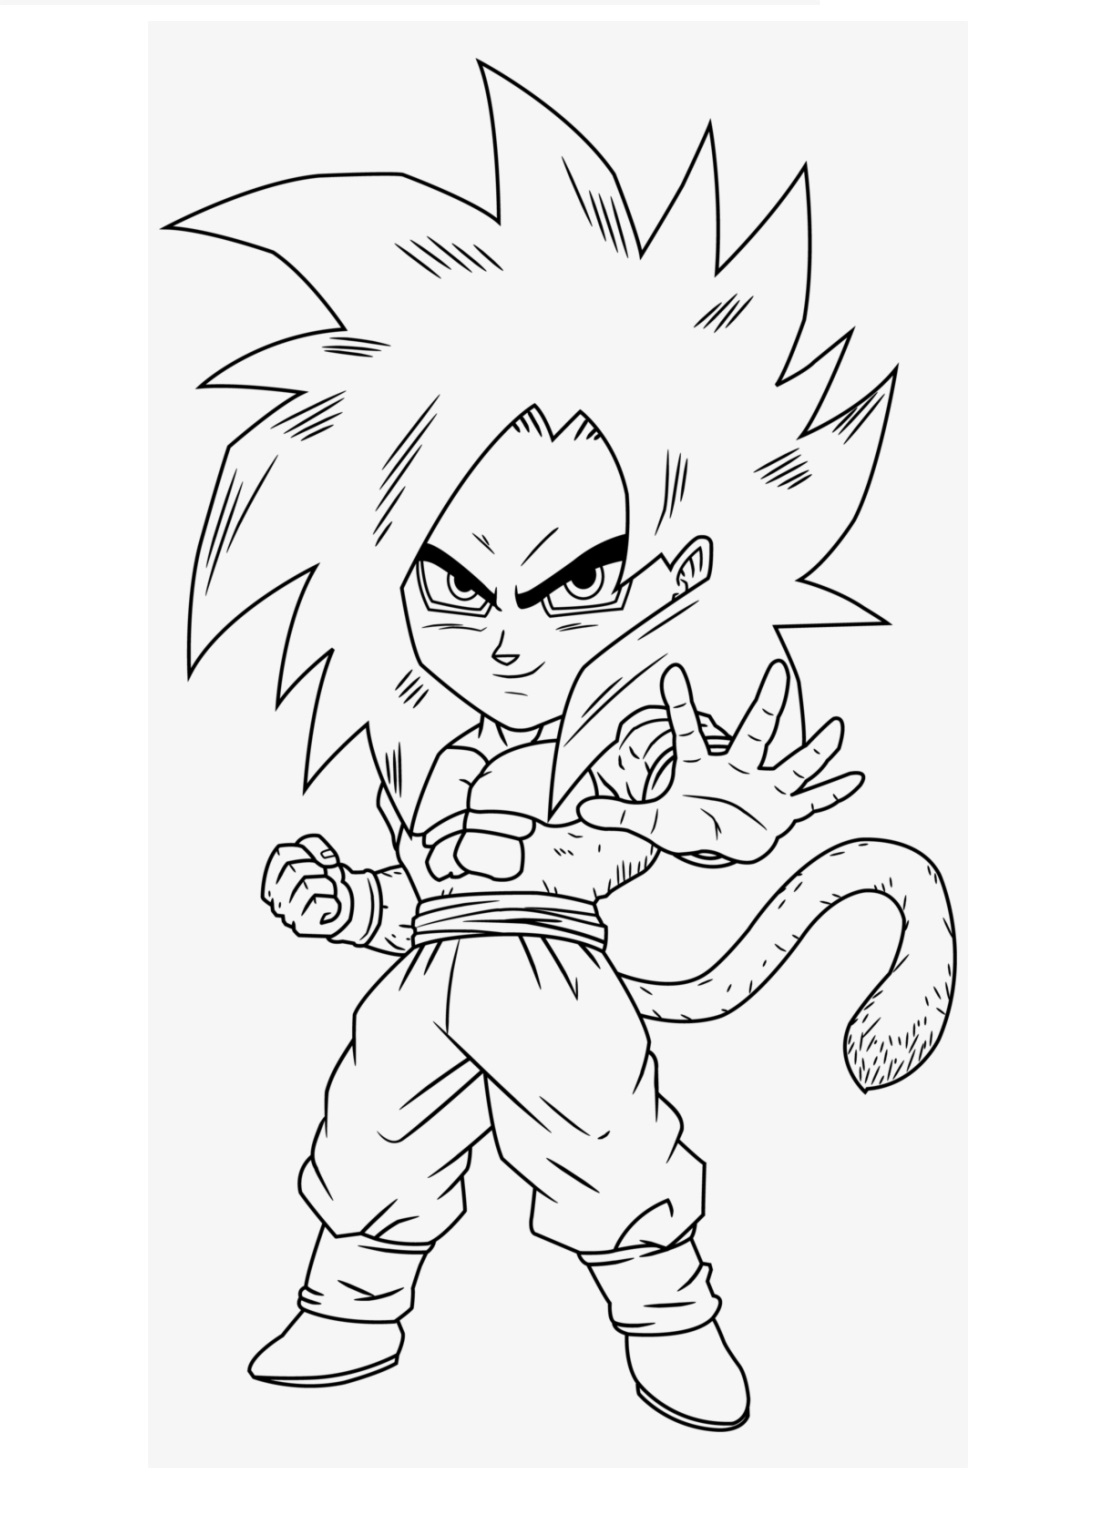 Chibi Goku Super Saiyan Xeno Coloring Page - Free Printable Coloring